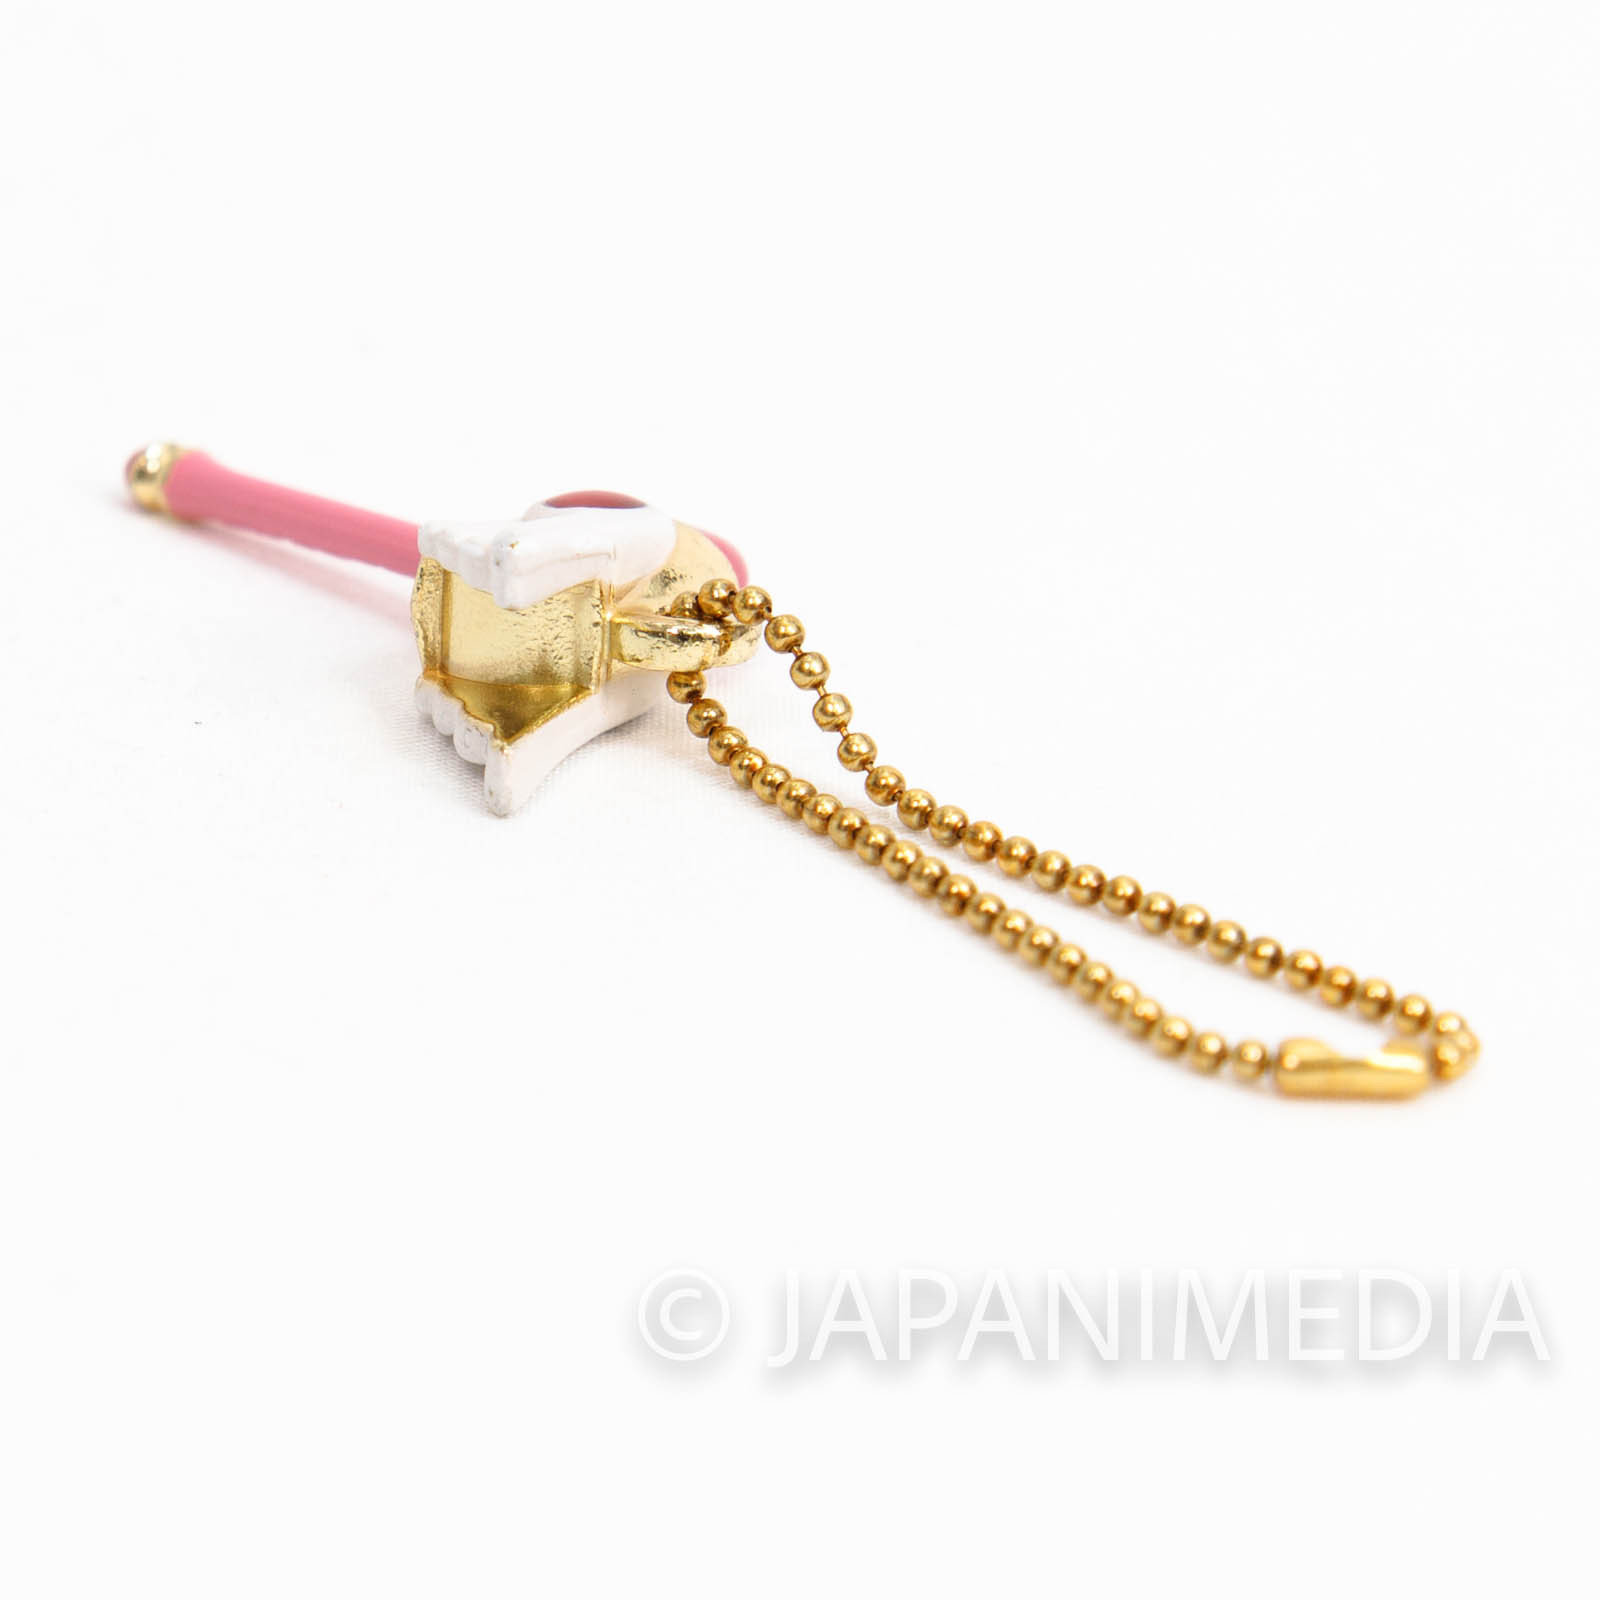 Cardcaptor Sakura Clow Wand Die casting Charm Ballchain CLAMP JAPAN ANIME